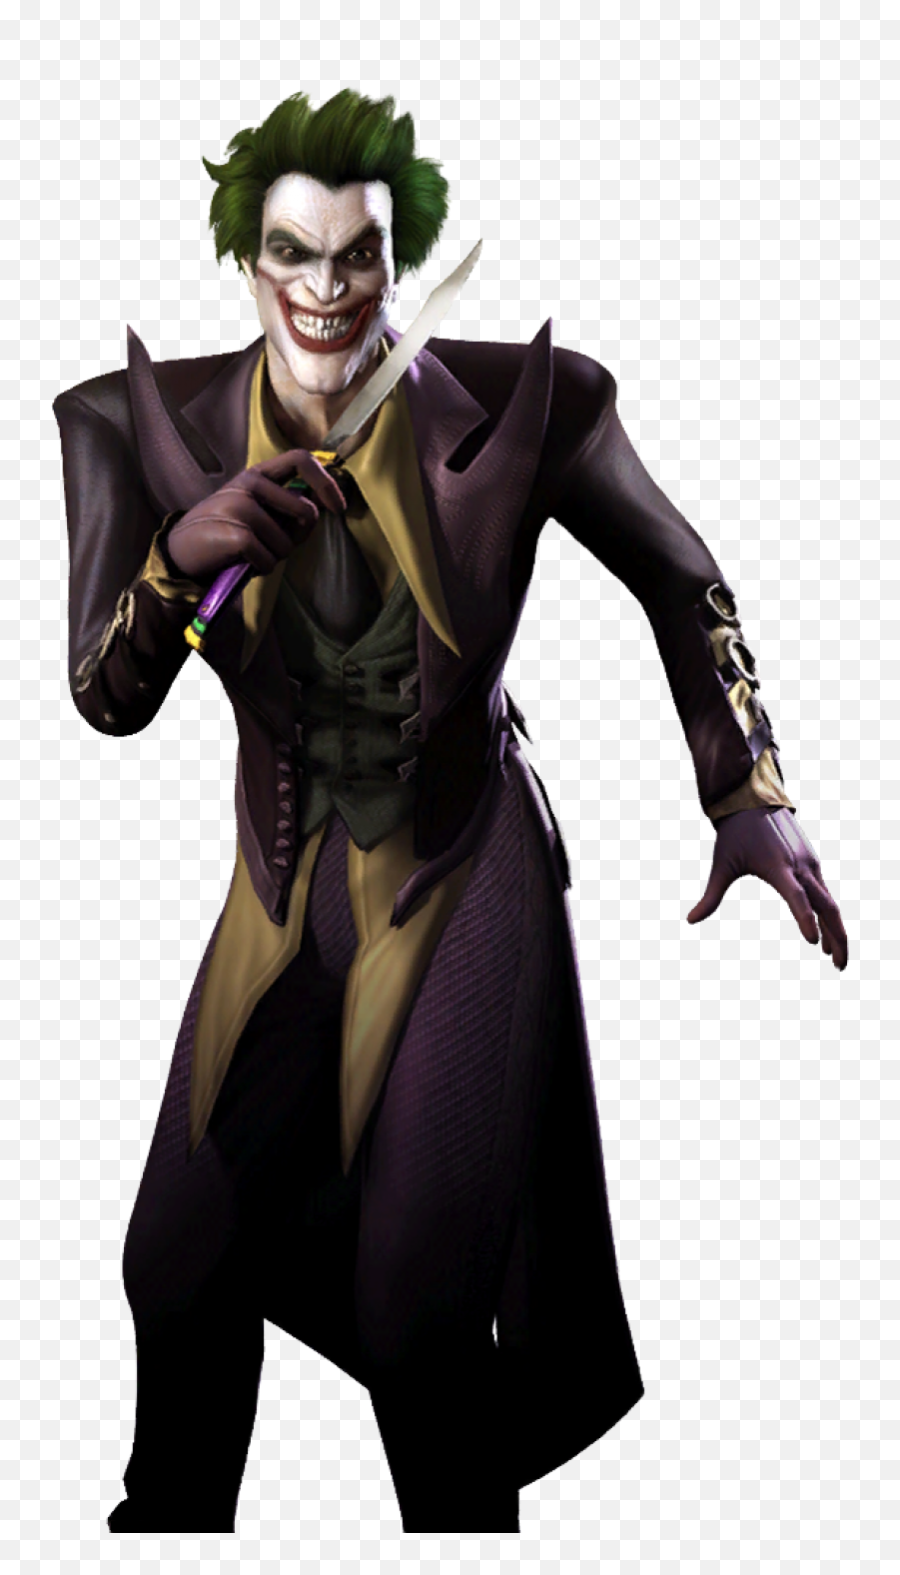 Joker Png Image - Injustice Gods Among Us Joker,The Joker Png